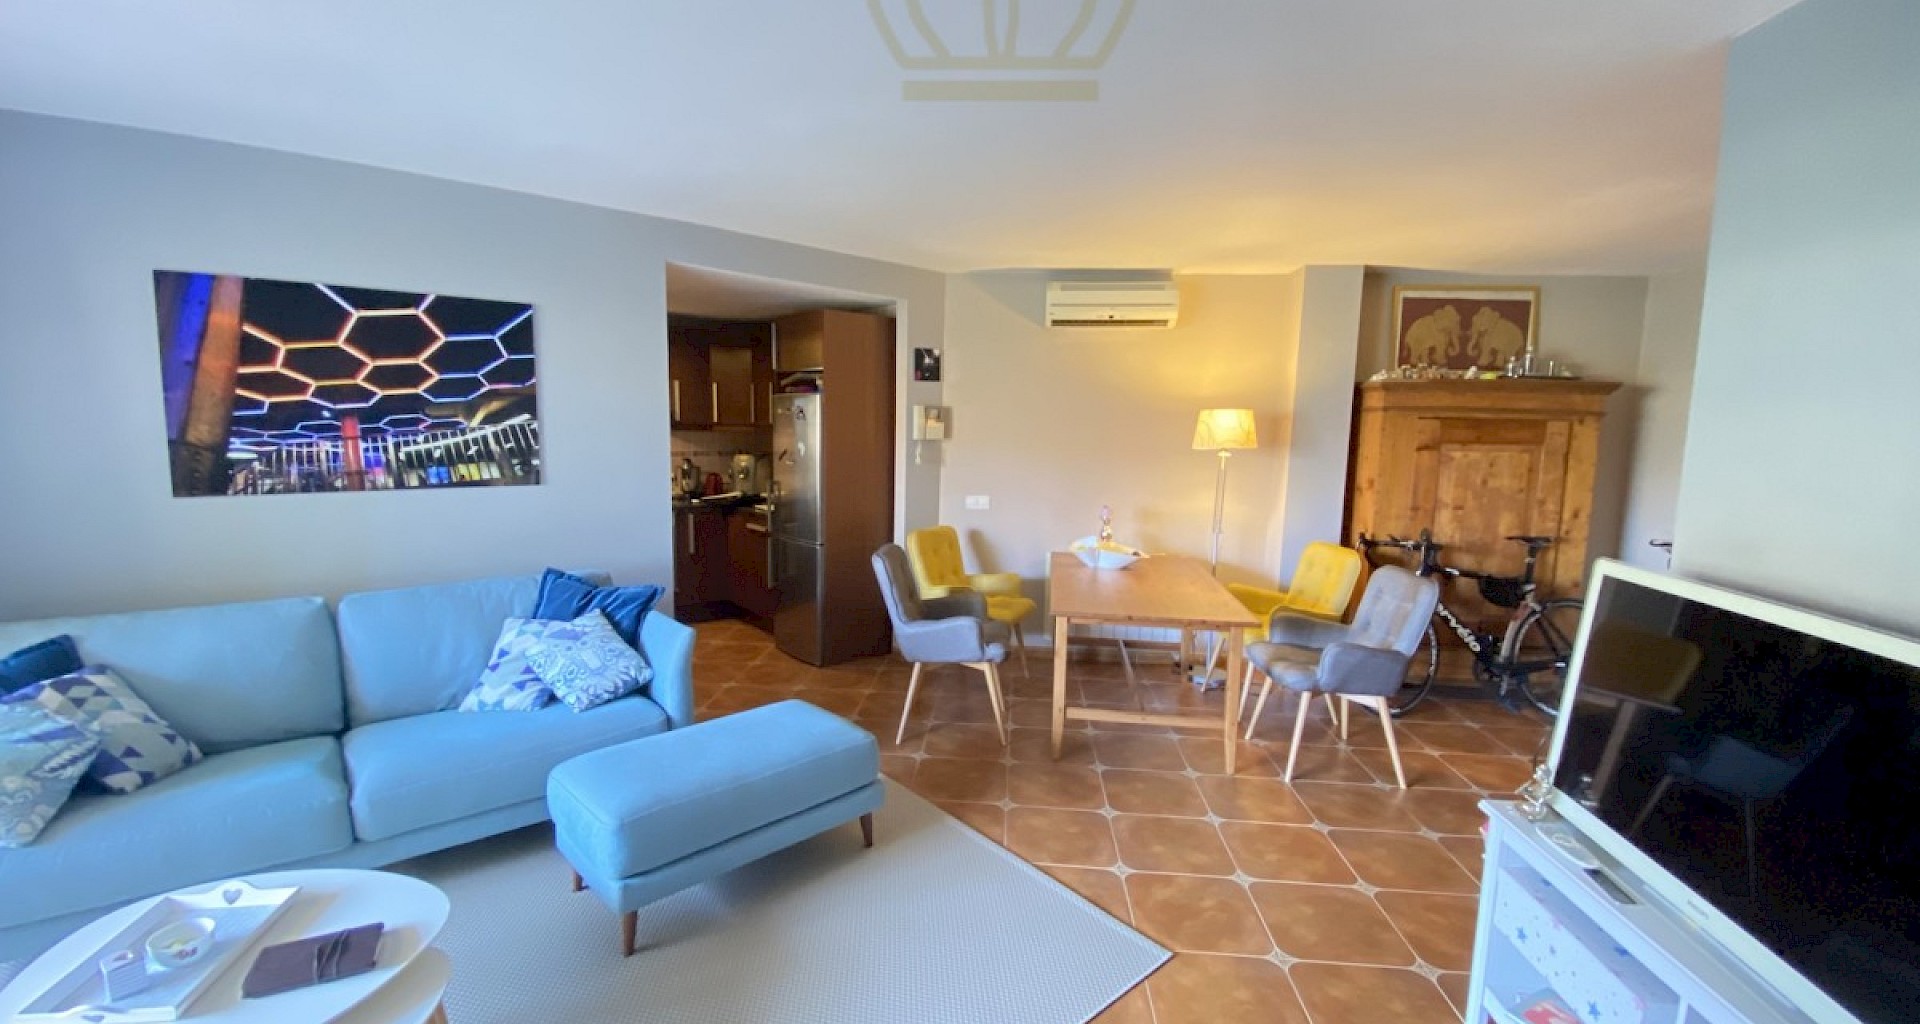 KROHN & LUEDEMANN Beautiful holiday flat in Puigderros near Palma de Mallorca 